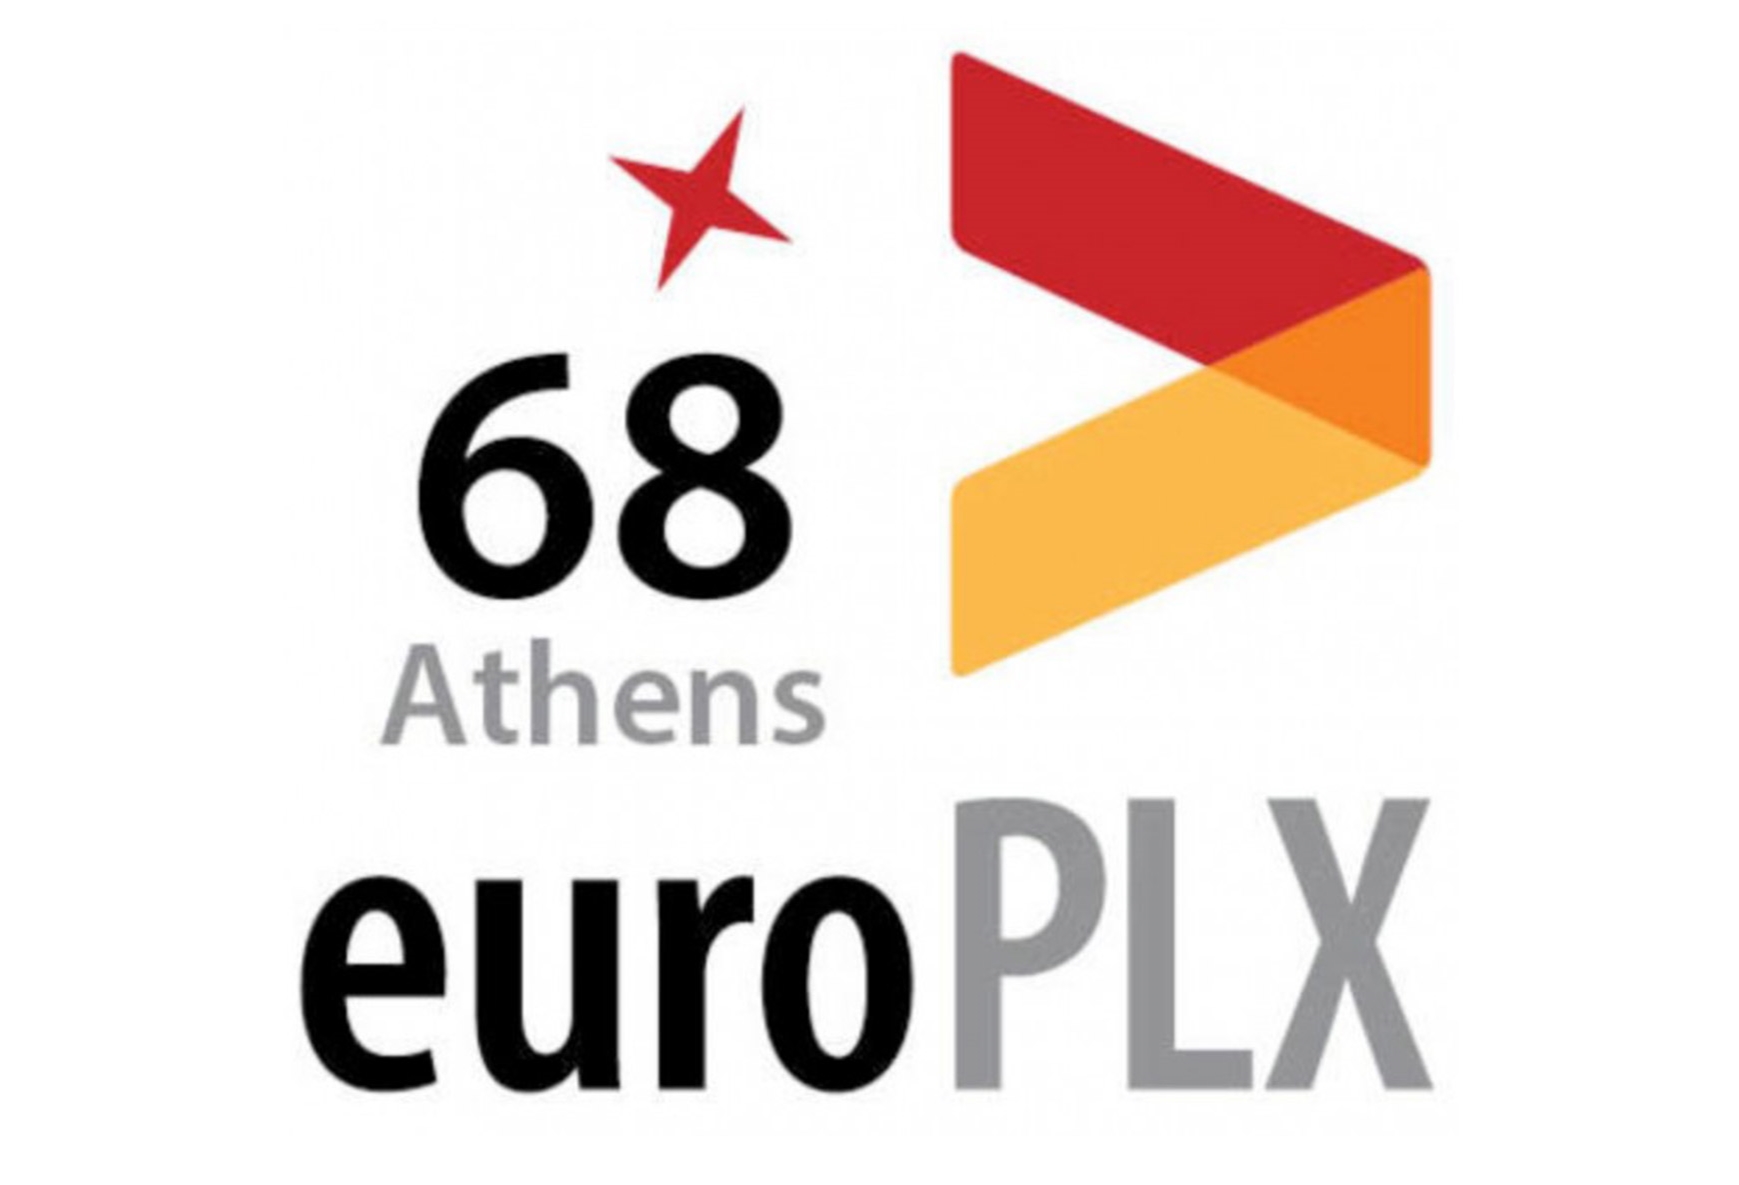 Meet us at euroPLX 68 Athens